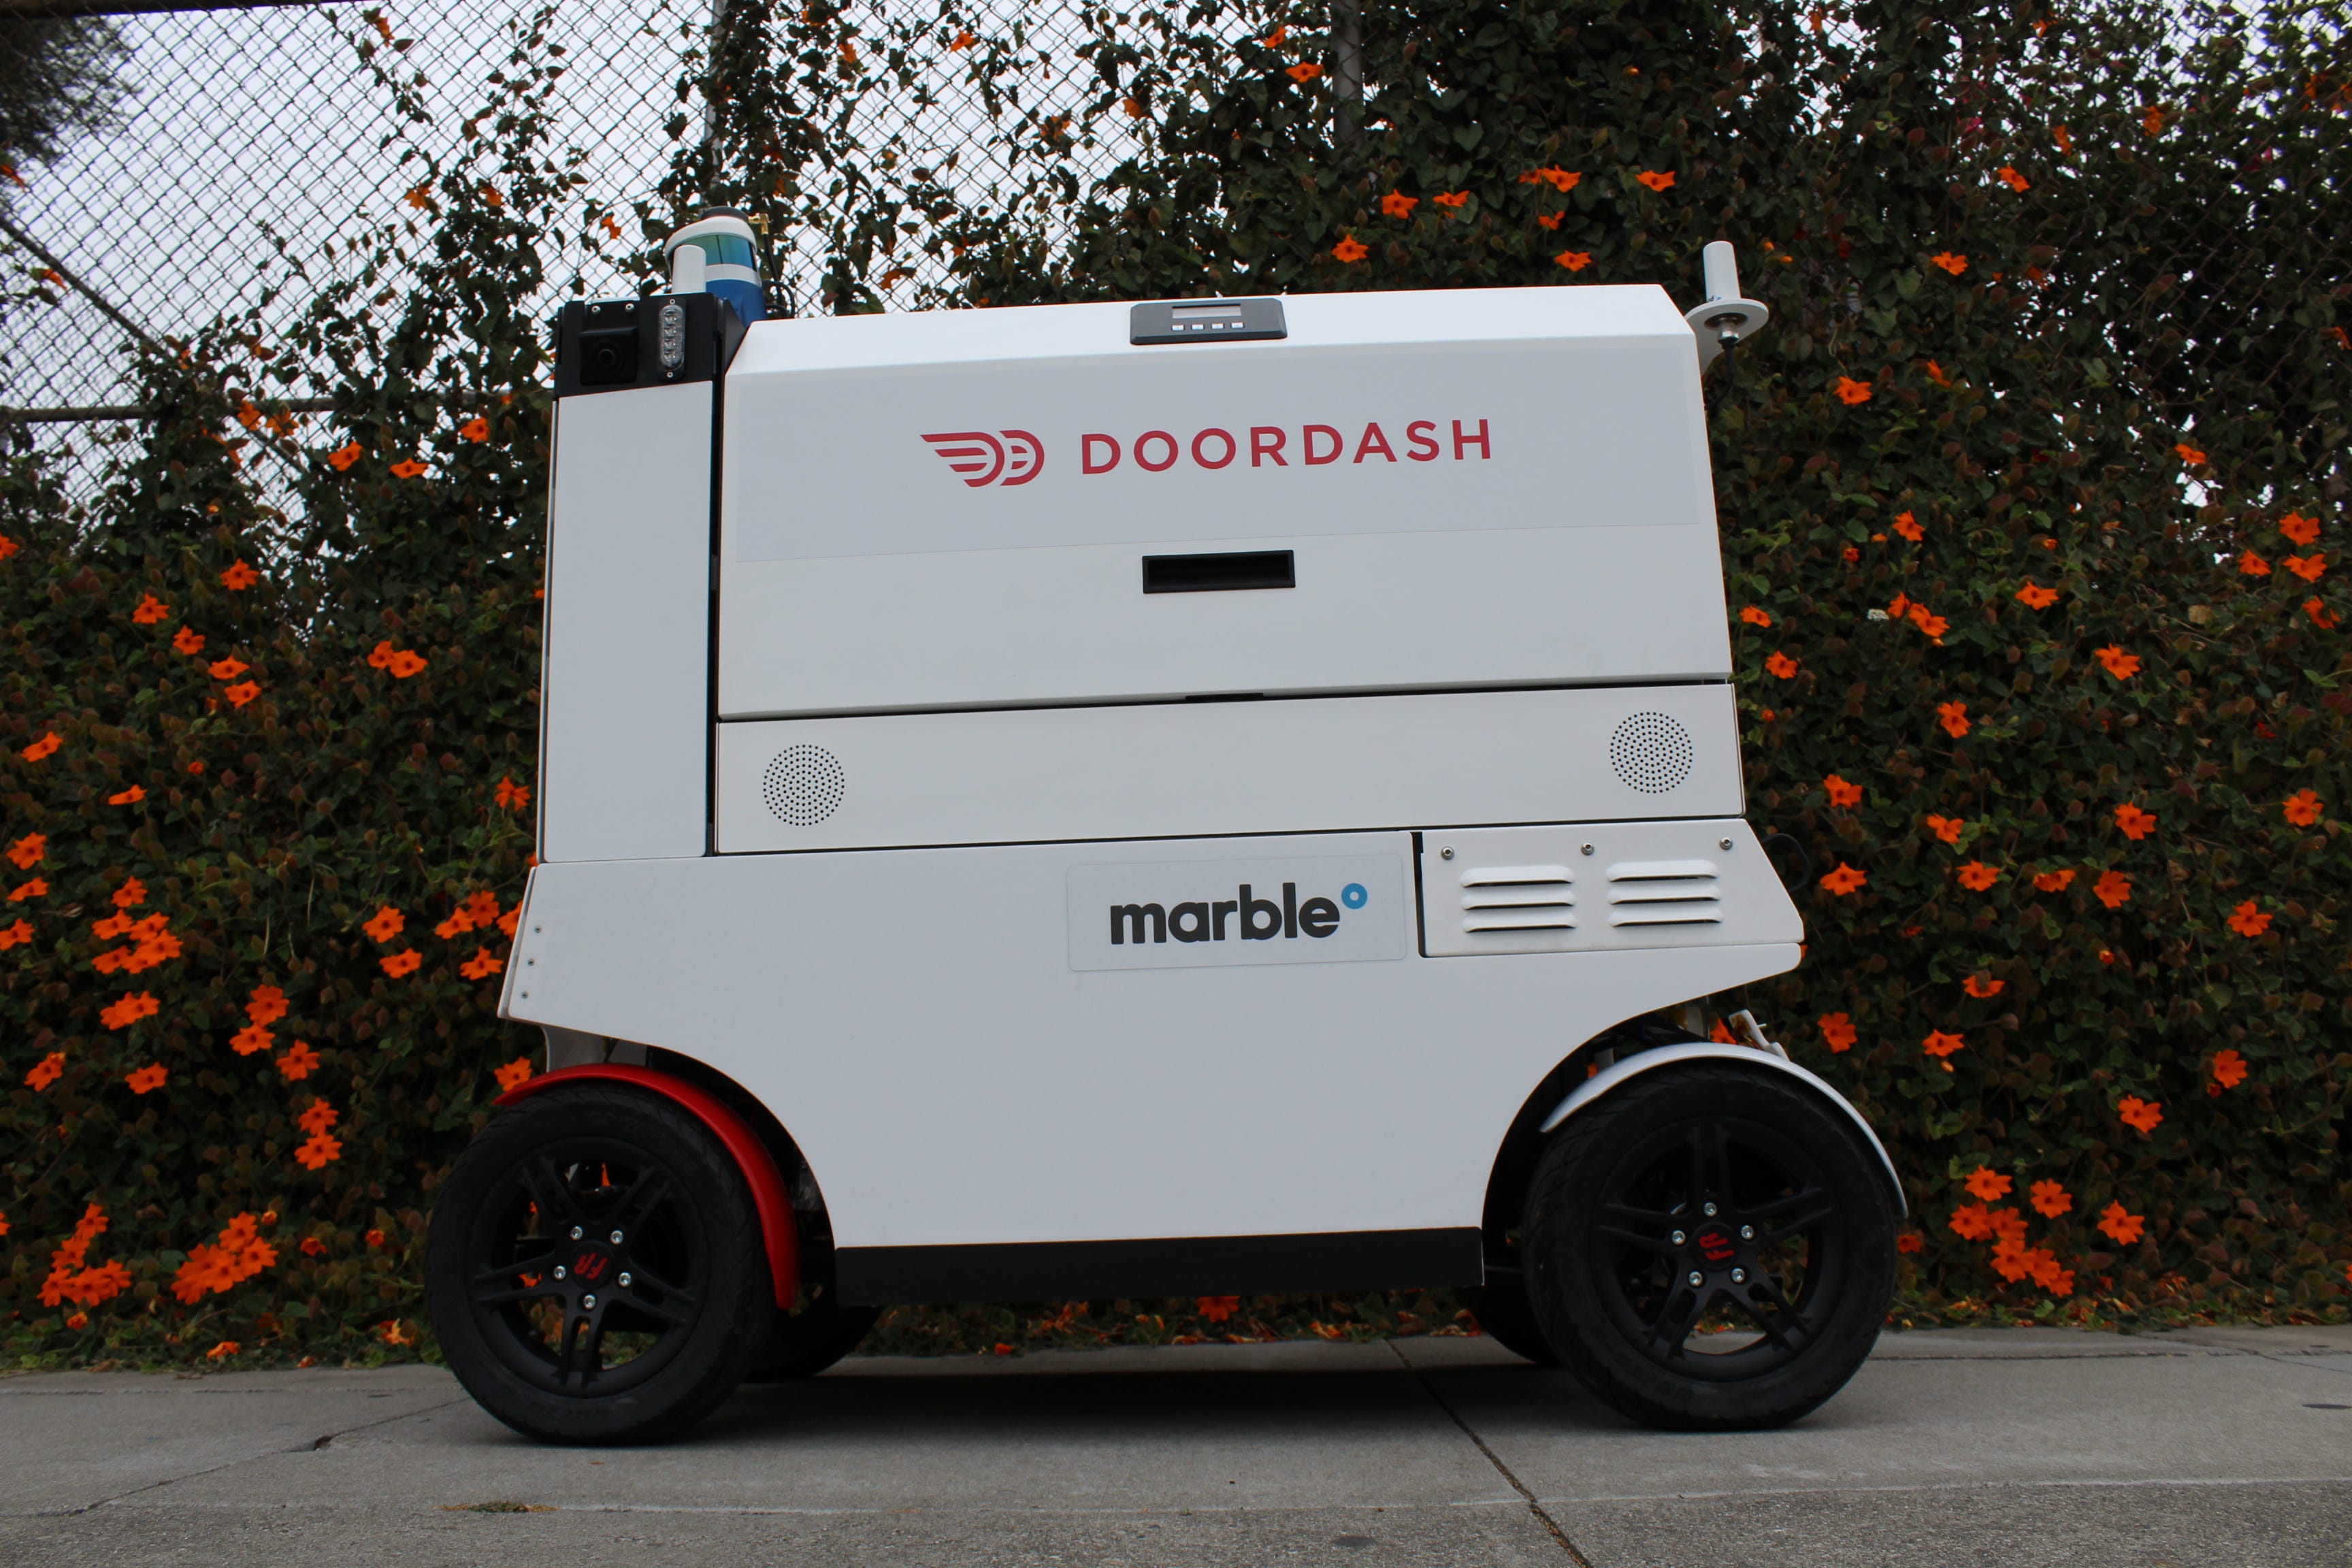 Welcoming our Robots DoorDash Fleet with Marble | by DoorDash | Medium